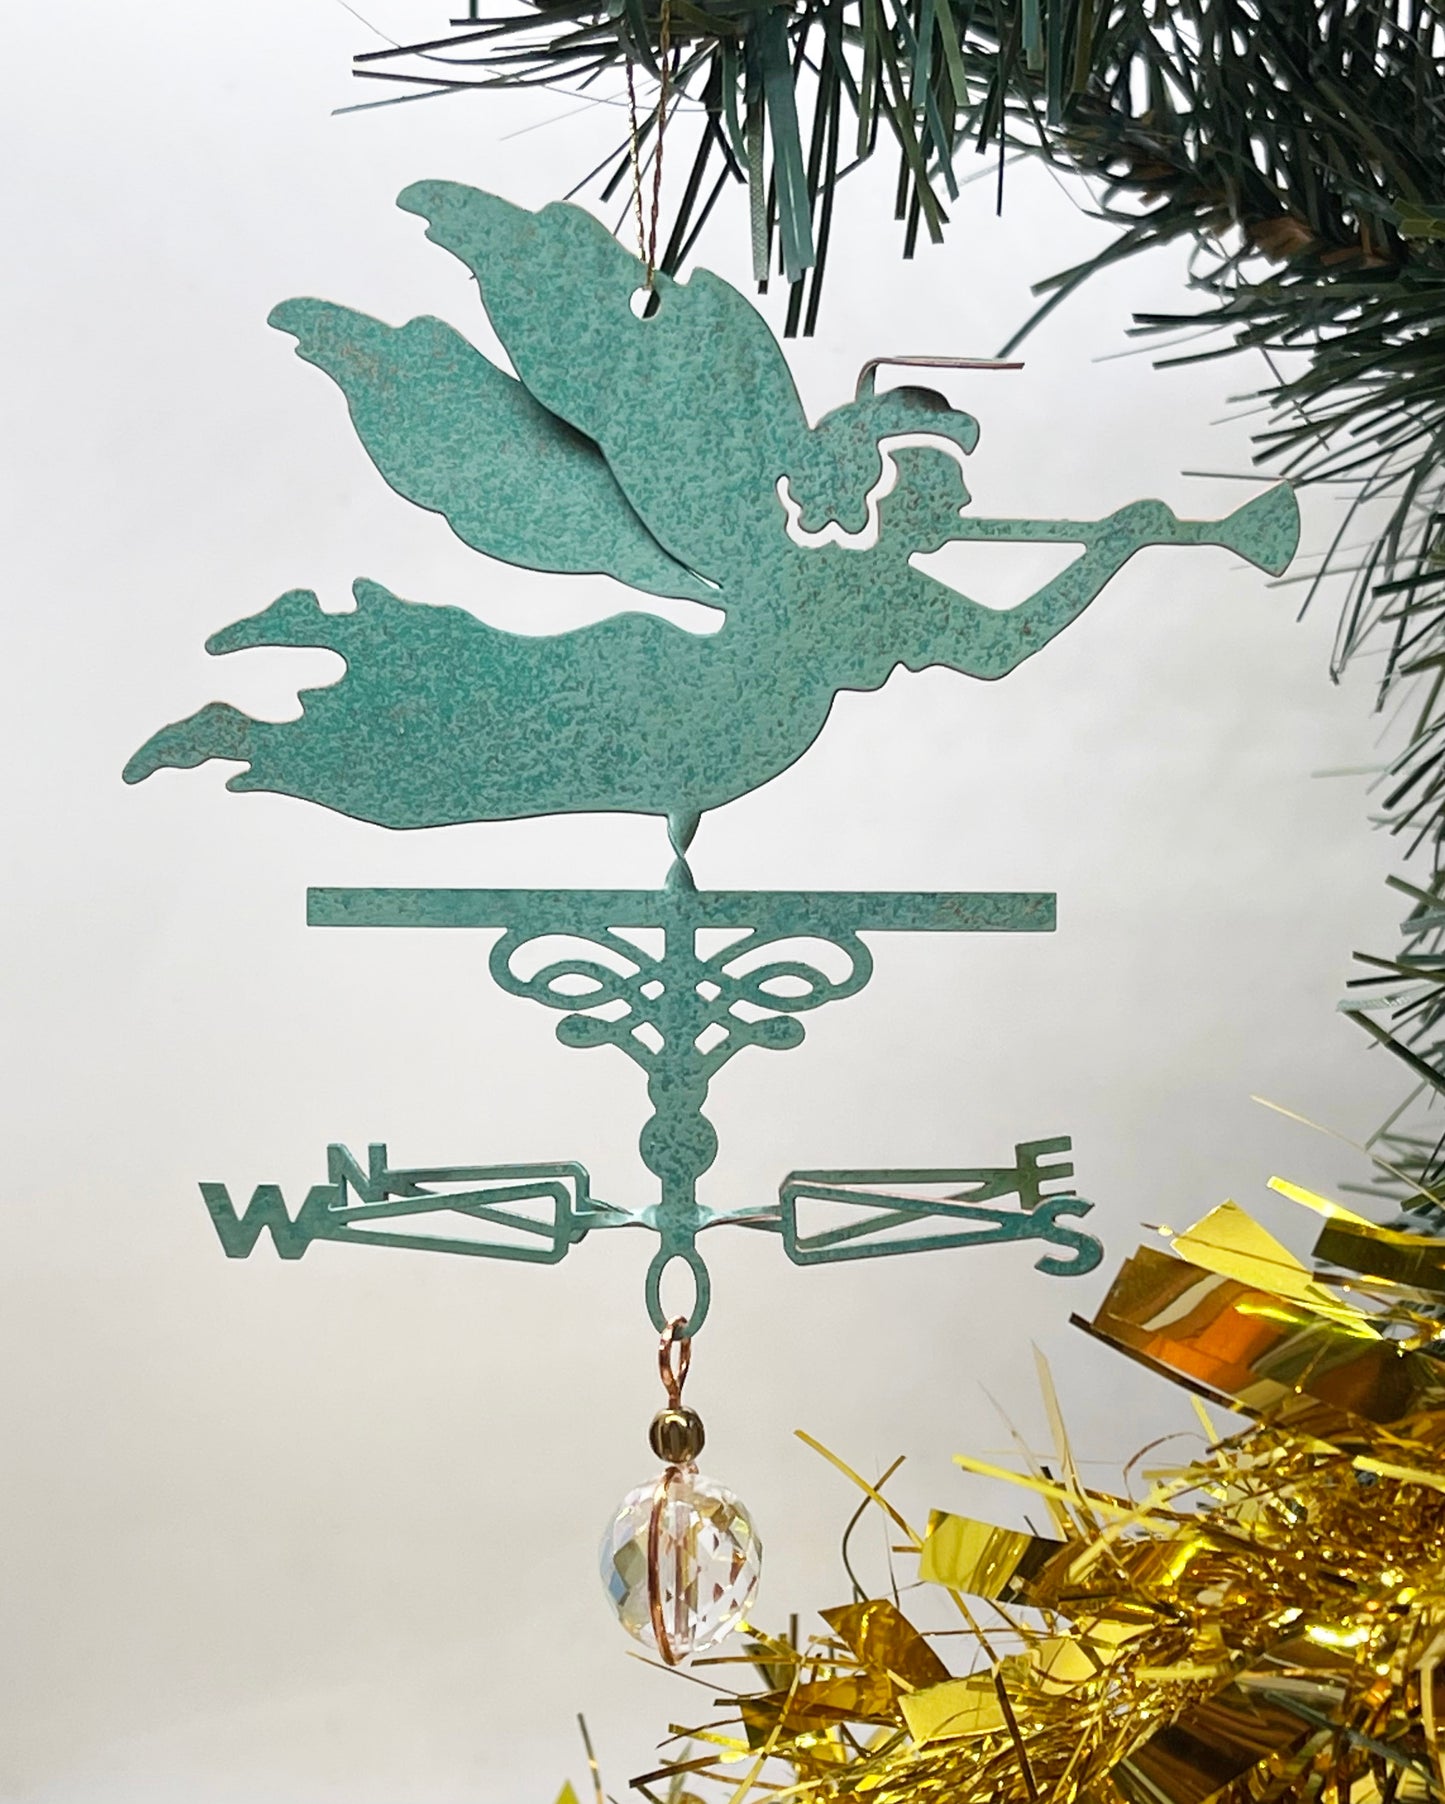 Angel Theme Ornament - Weathervane